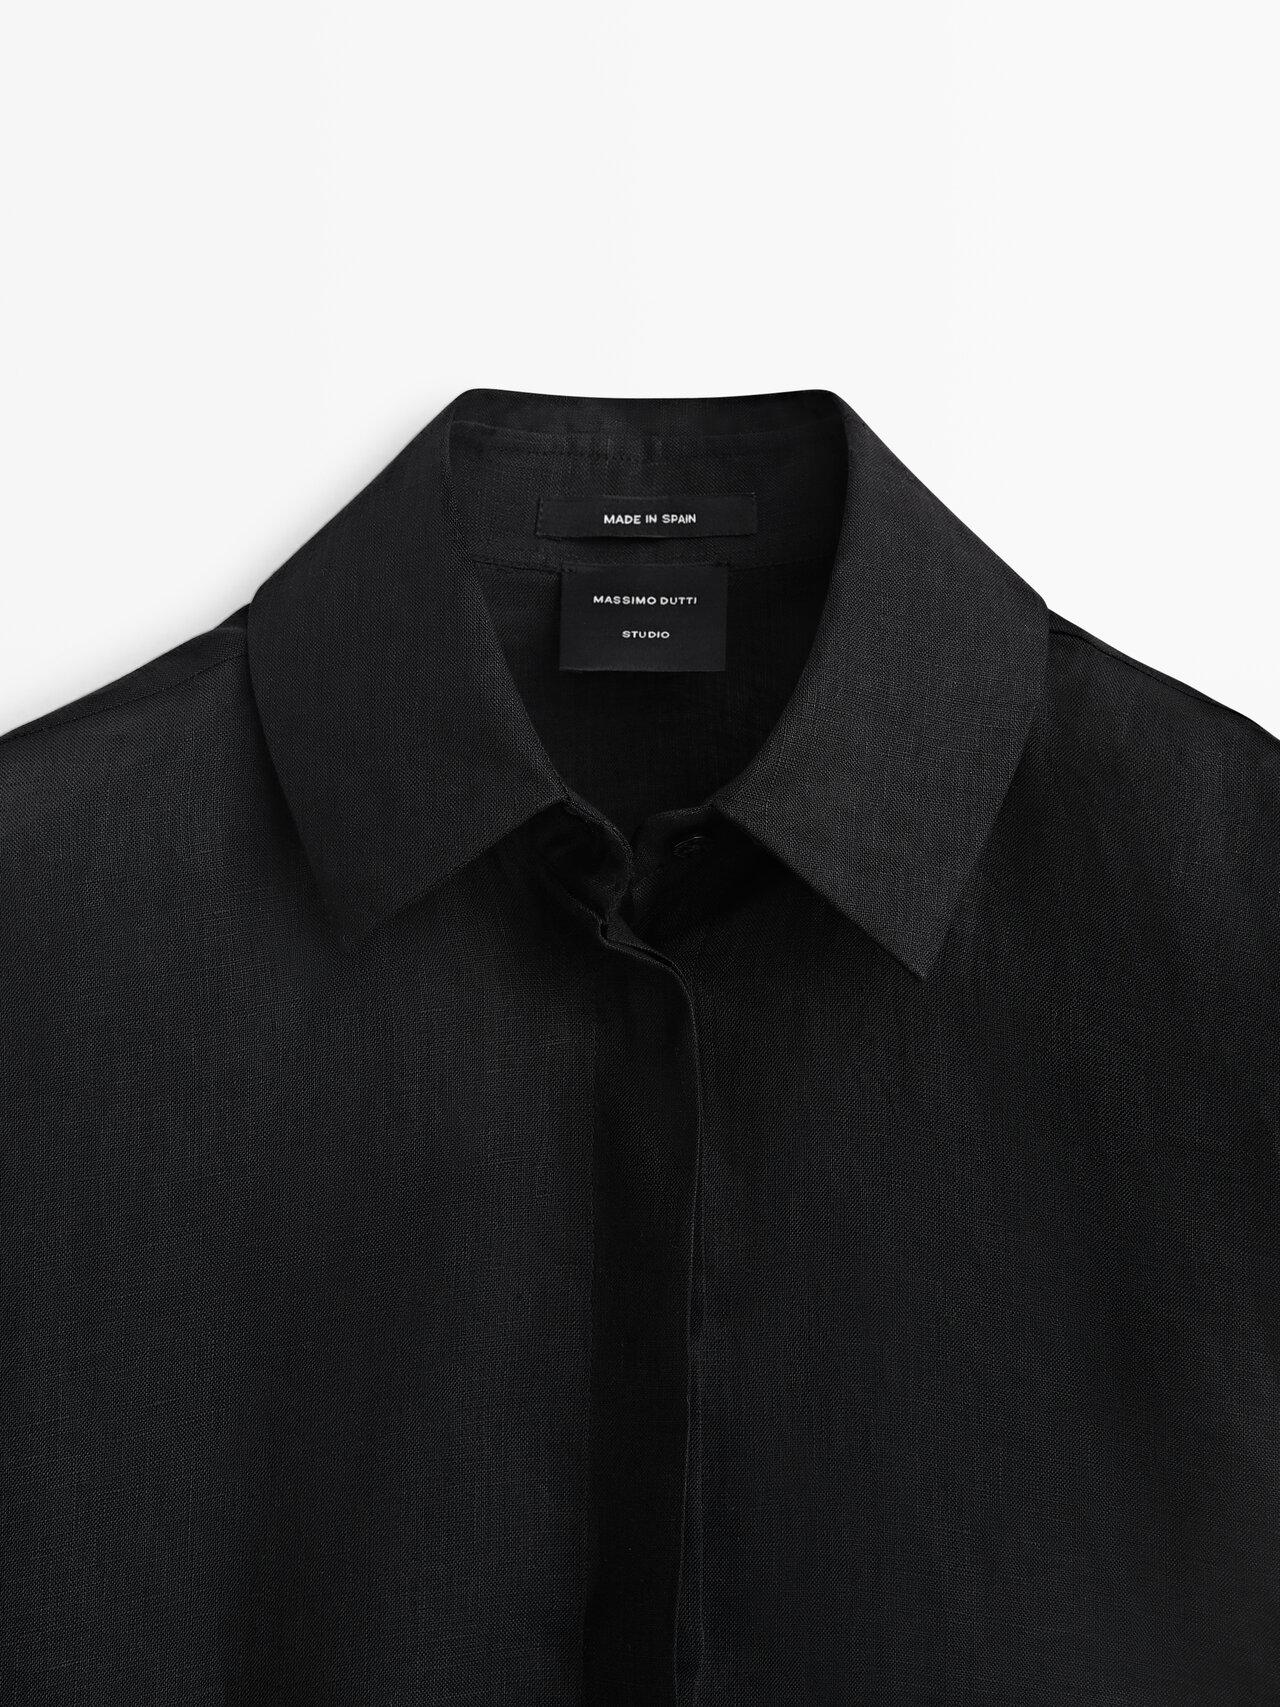 MASSIMO DUTTI Peplum Linen Shirt - Studio in Black | Lyst